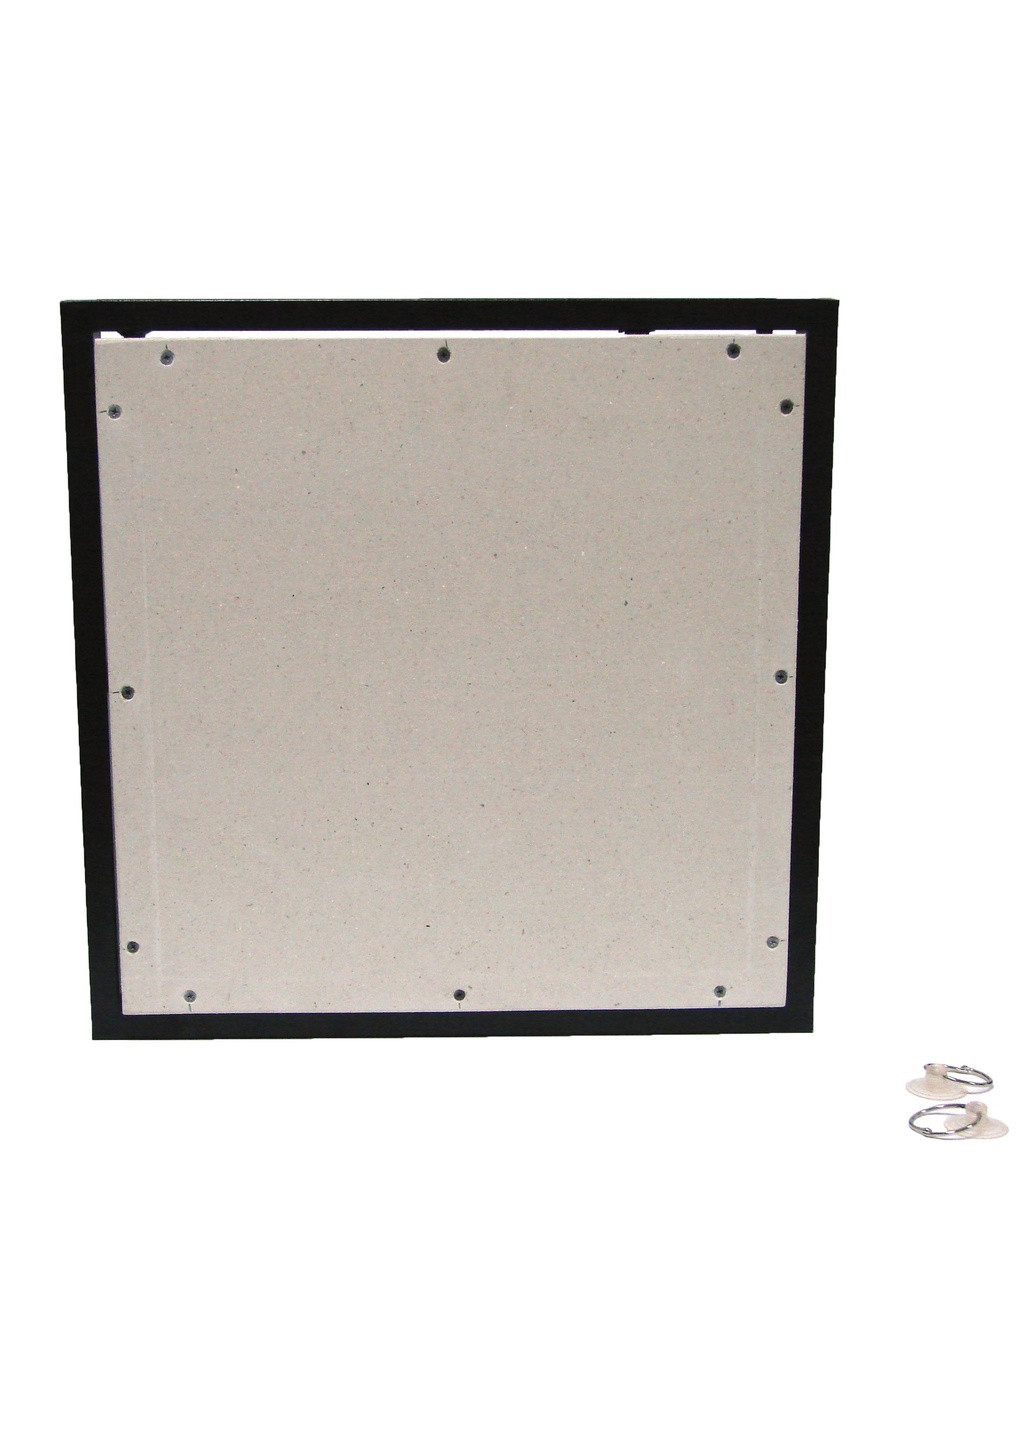 Ревизионный люк скрытого монтажа под плитку фронтальнораспашного типа 600x600 ревизионная дверца для плитки (1207) S-Dom (264208761)